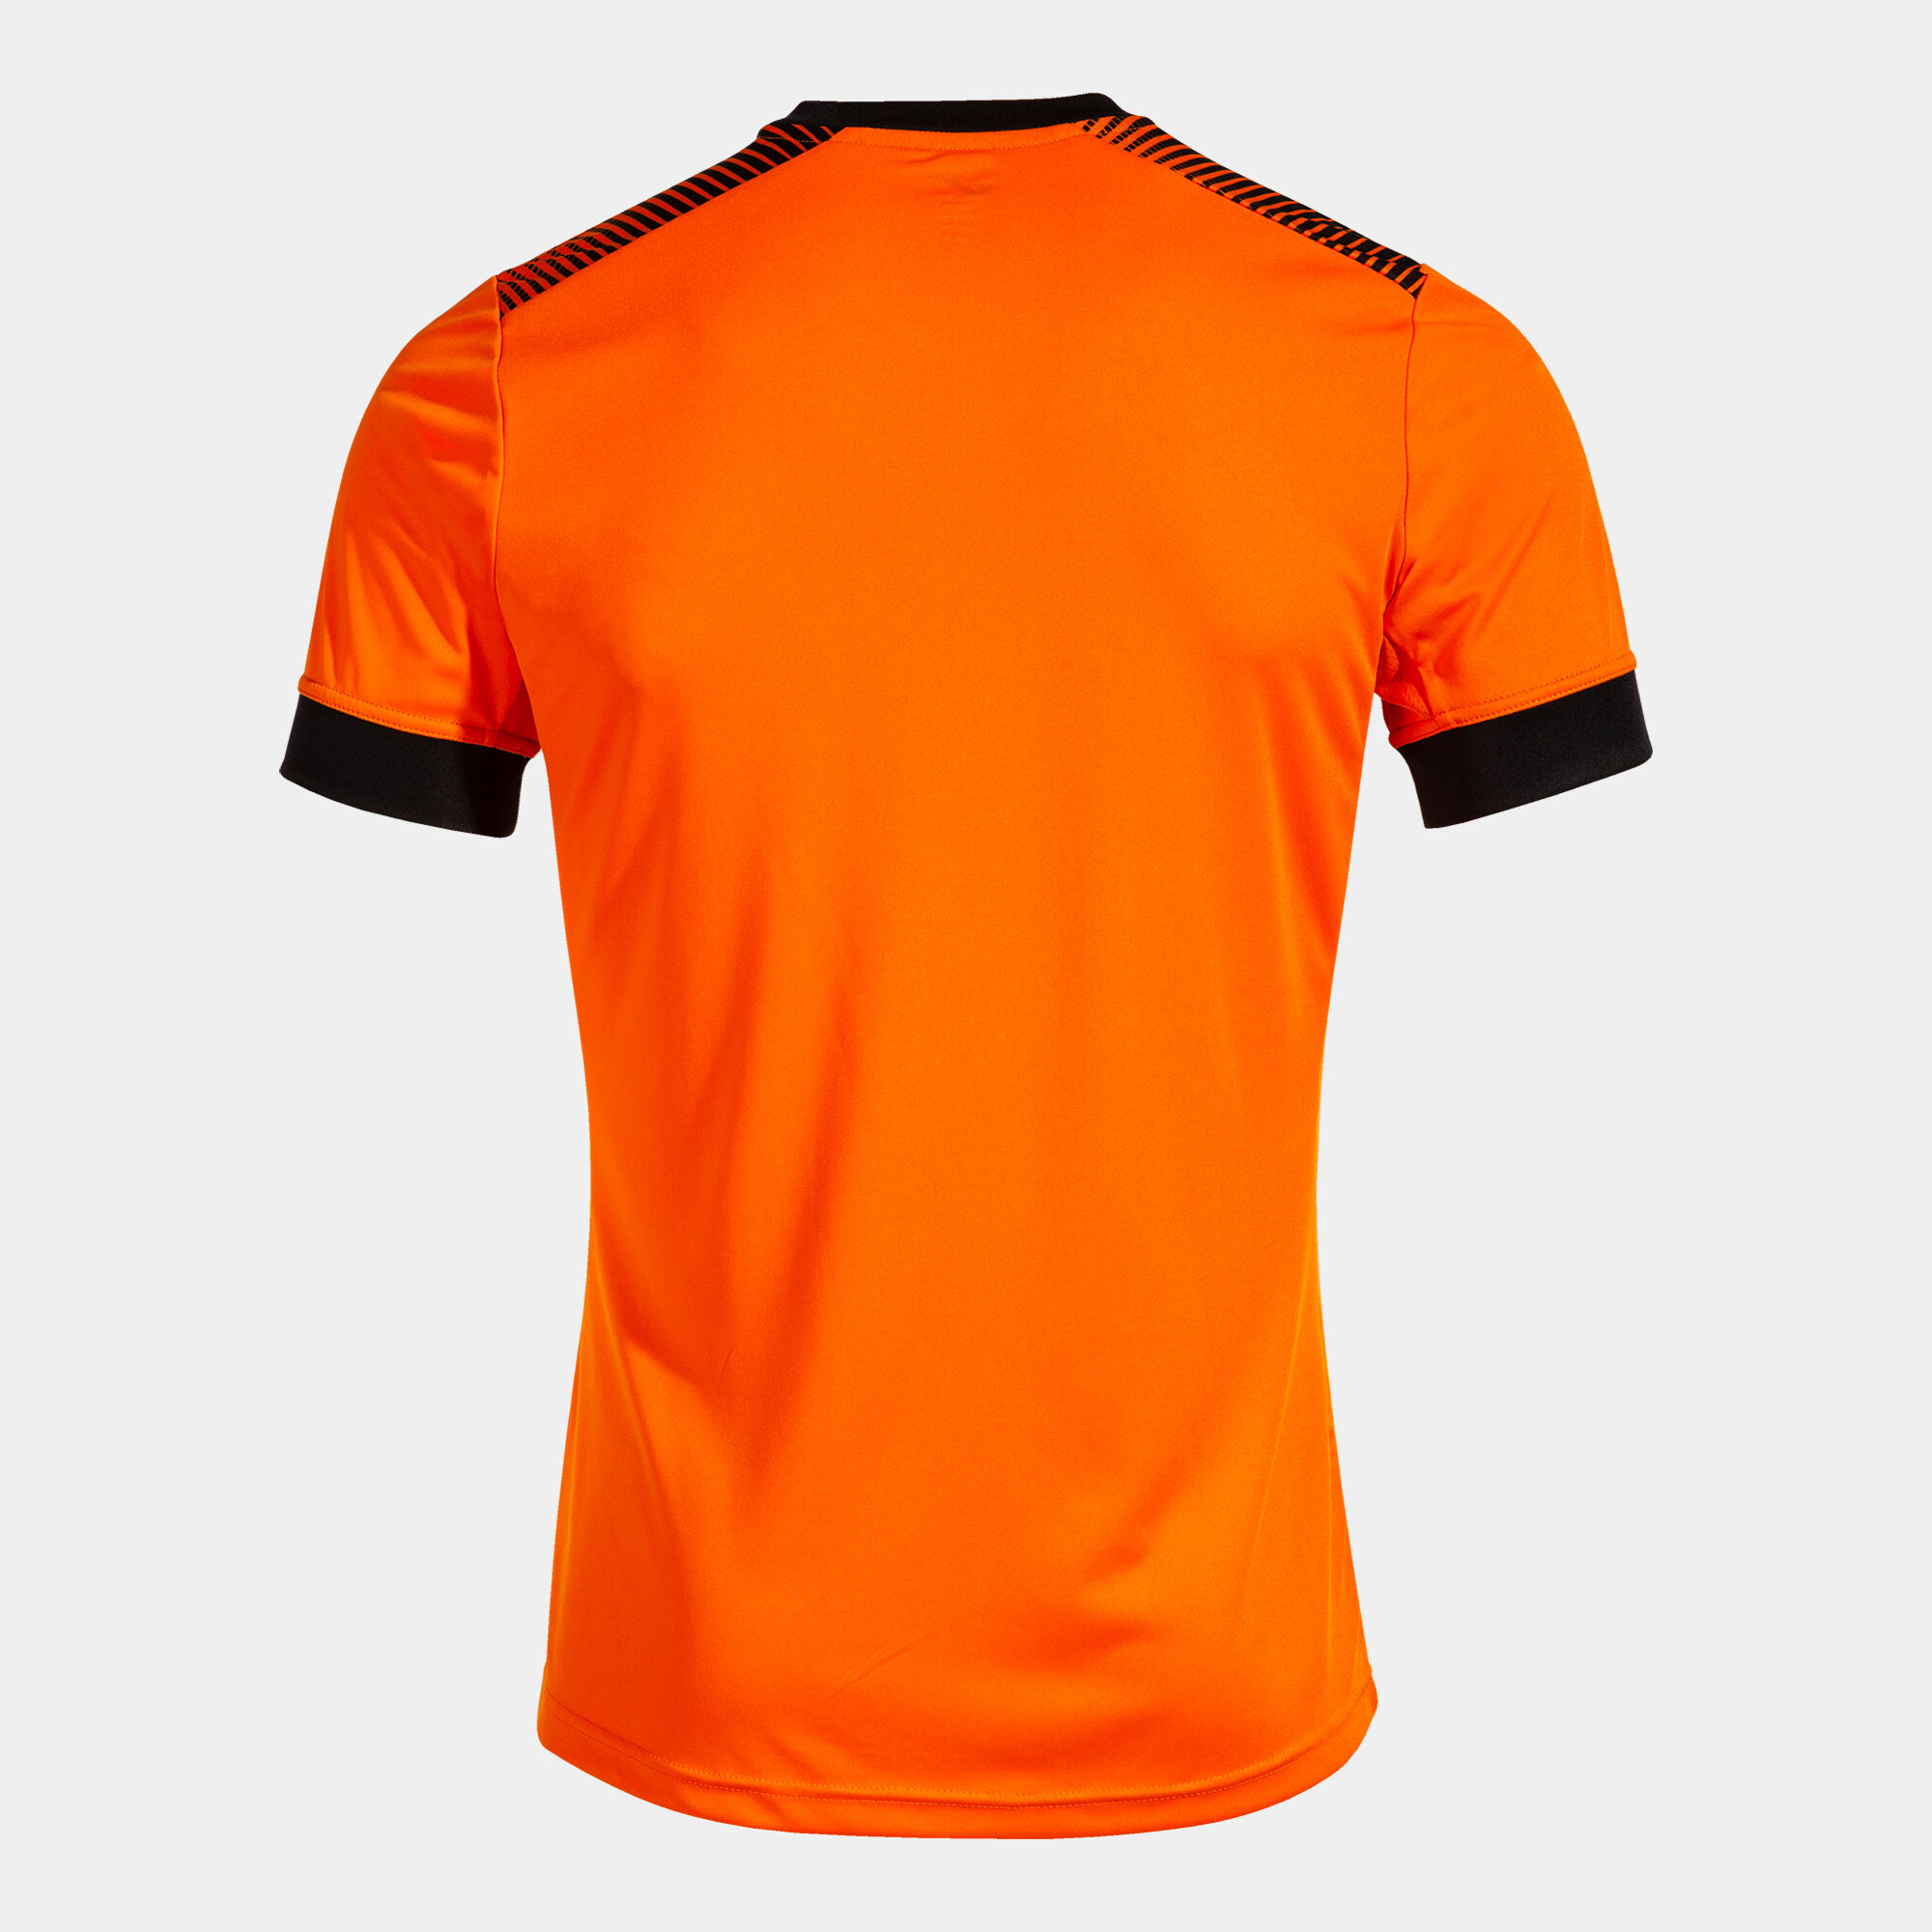 Shirt short sleeve man Eco Supernova orange black